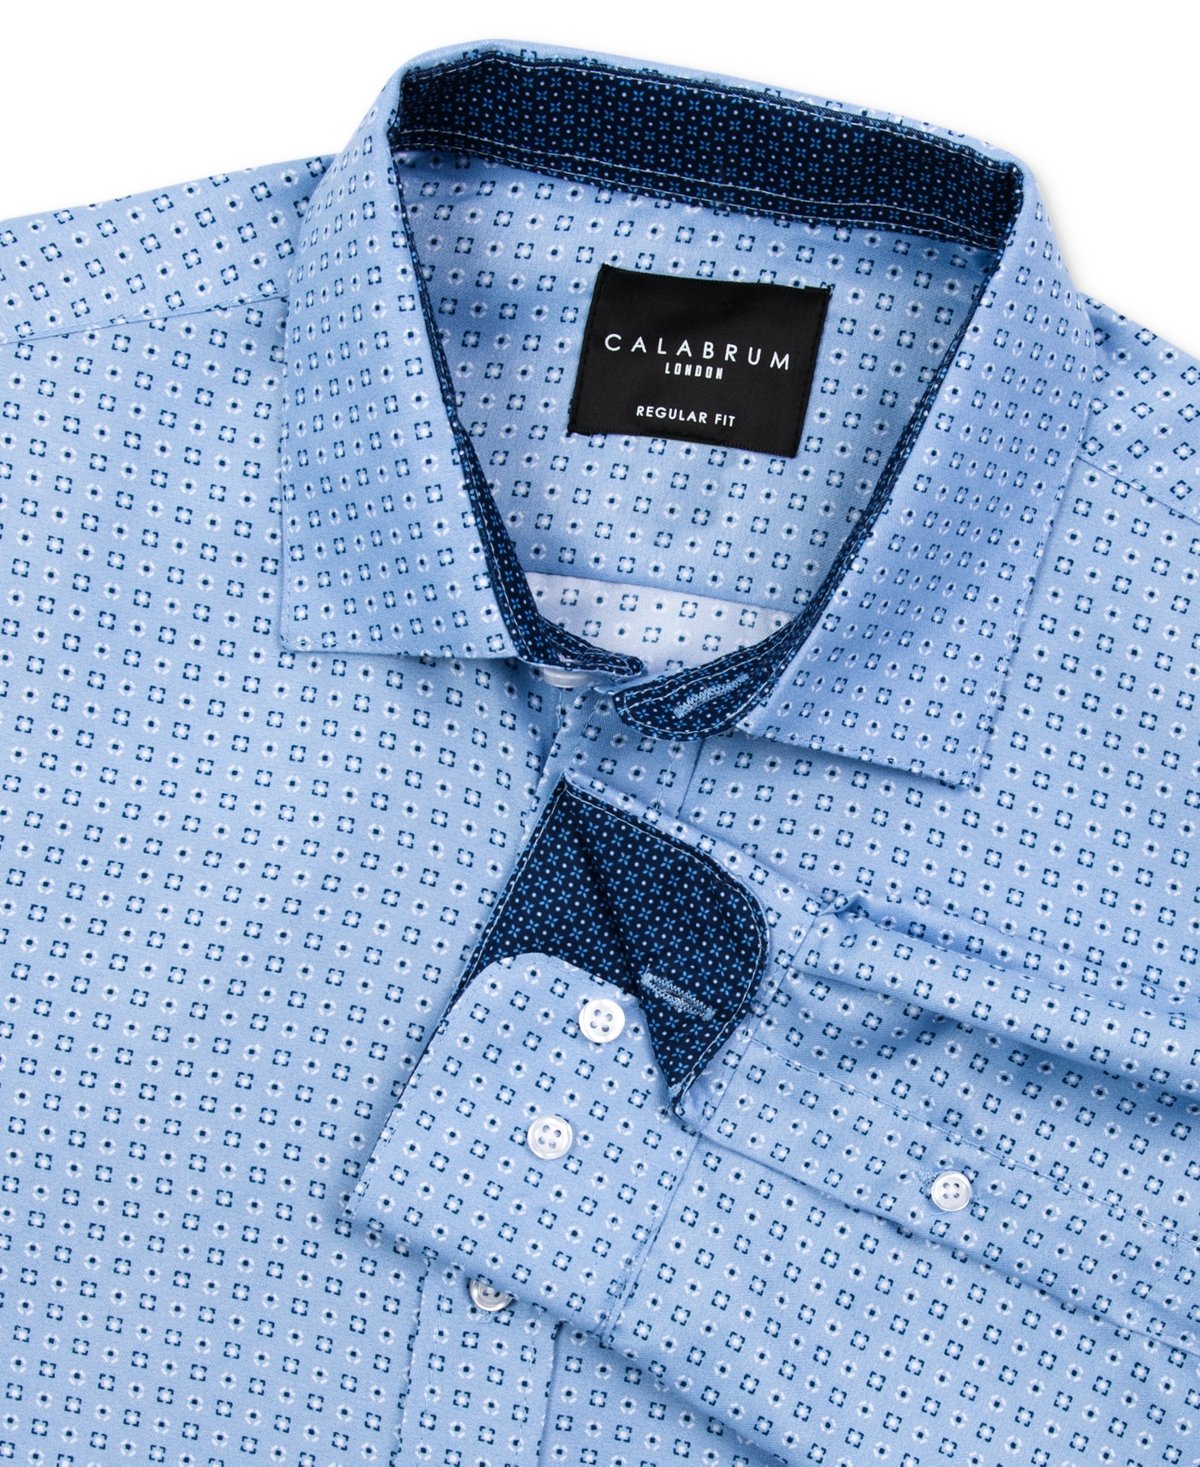 Calabrum Men's Regular Fit Micro Geo Print Wrinkle Free Performance Dress Shirt In Blue